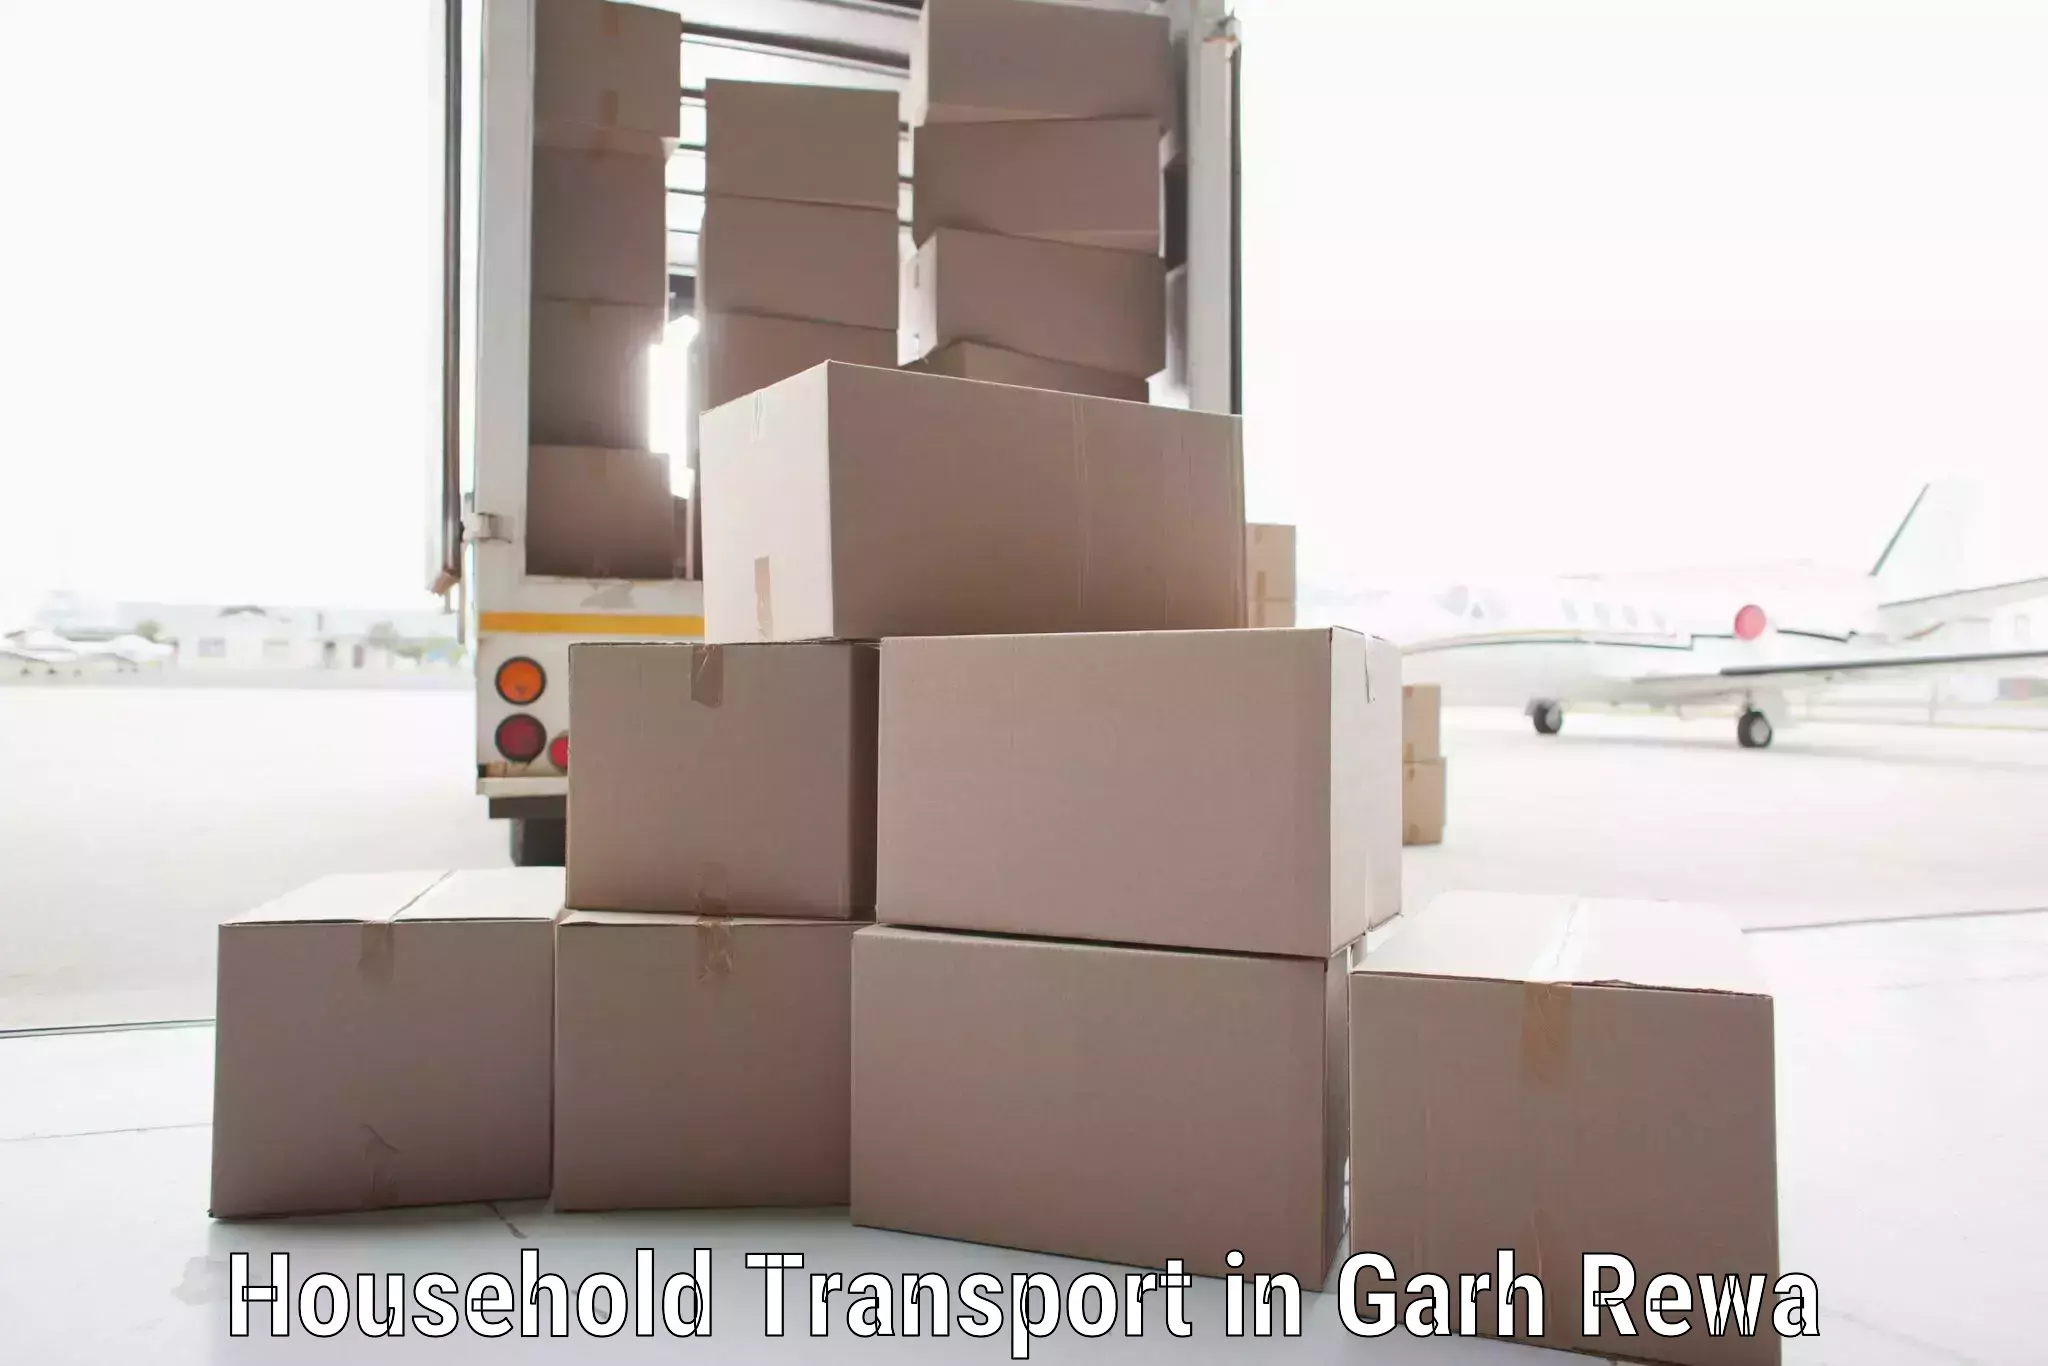 Furniture delivery service in Garh Rewa